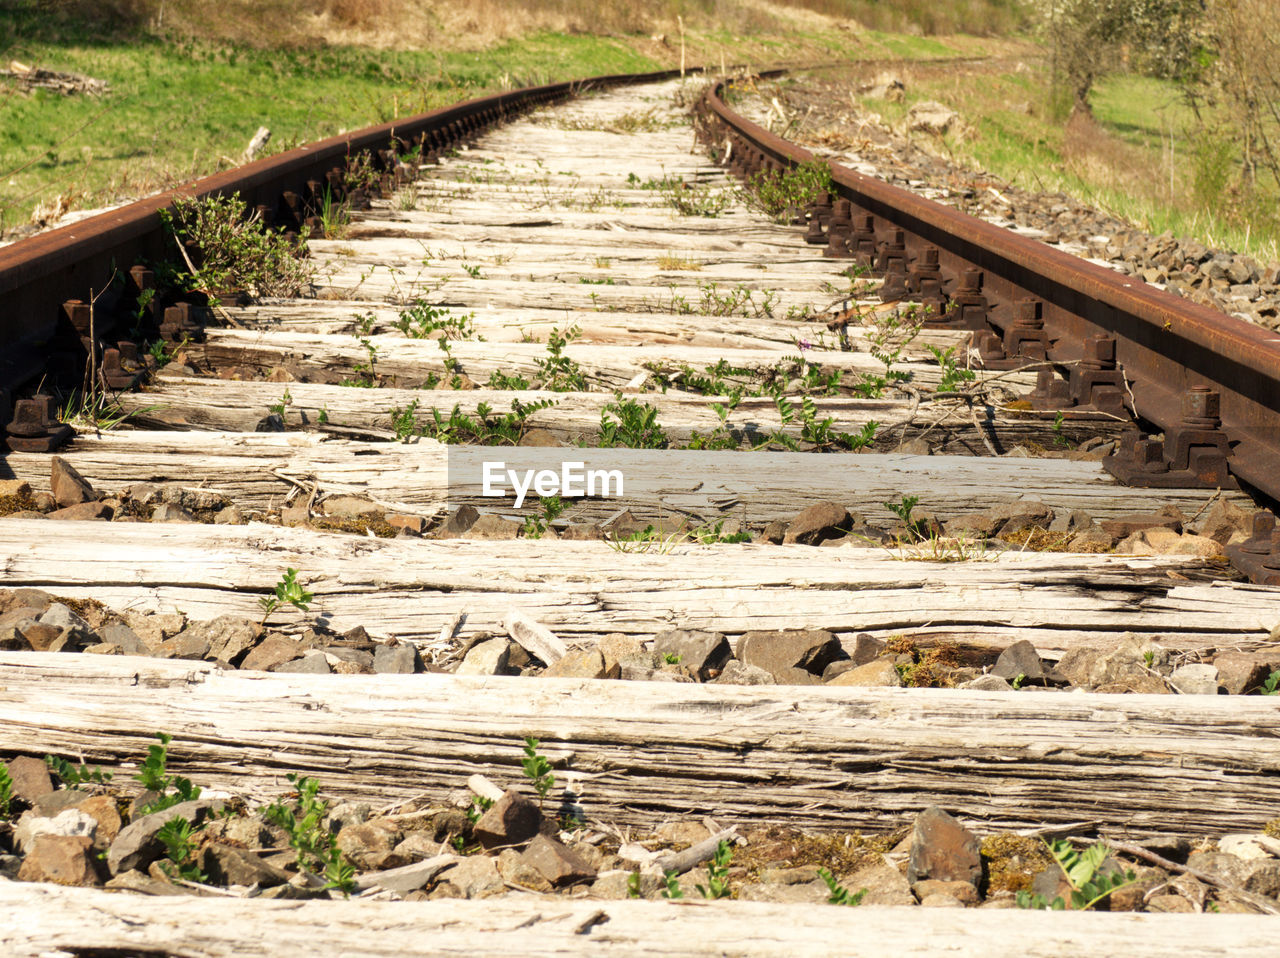 Railroad tracks by trees